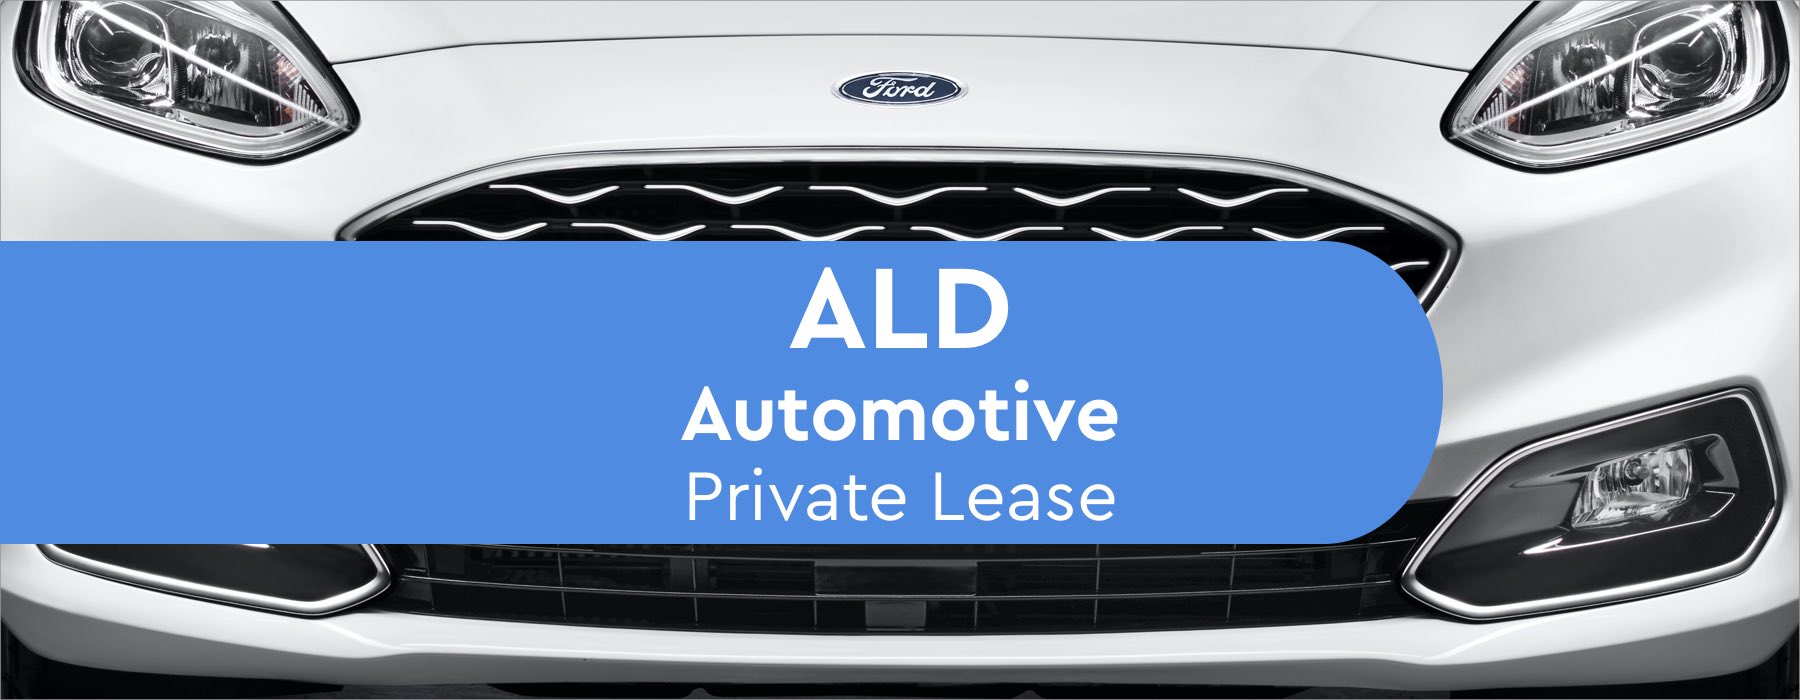 ald automotive Private Lease